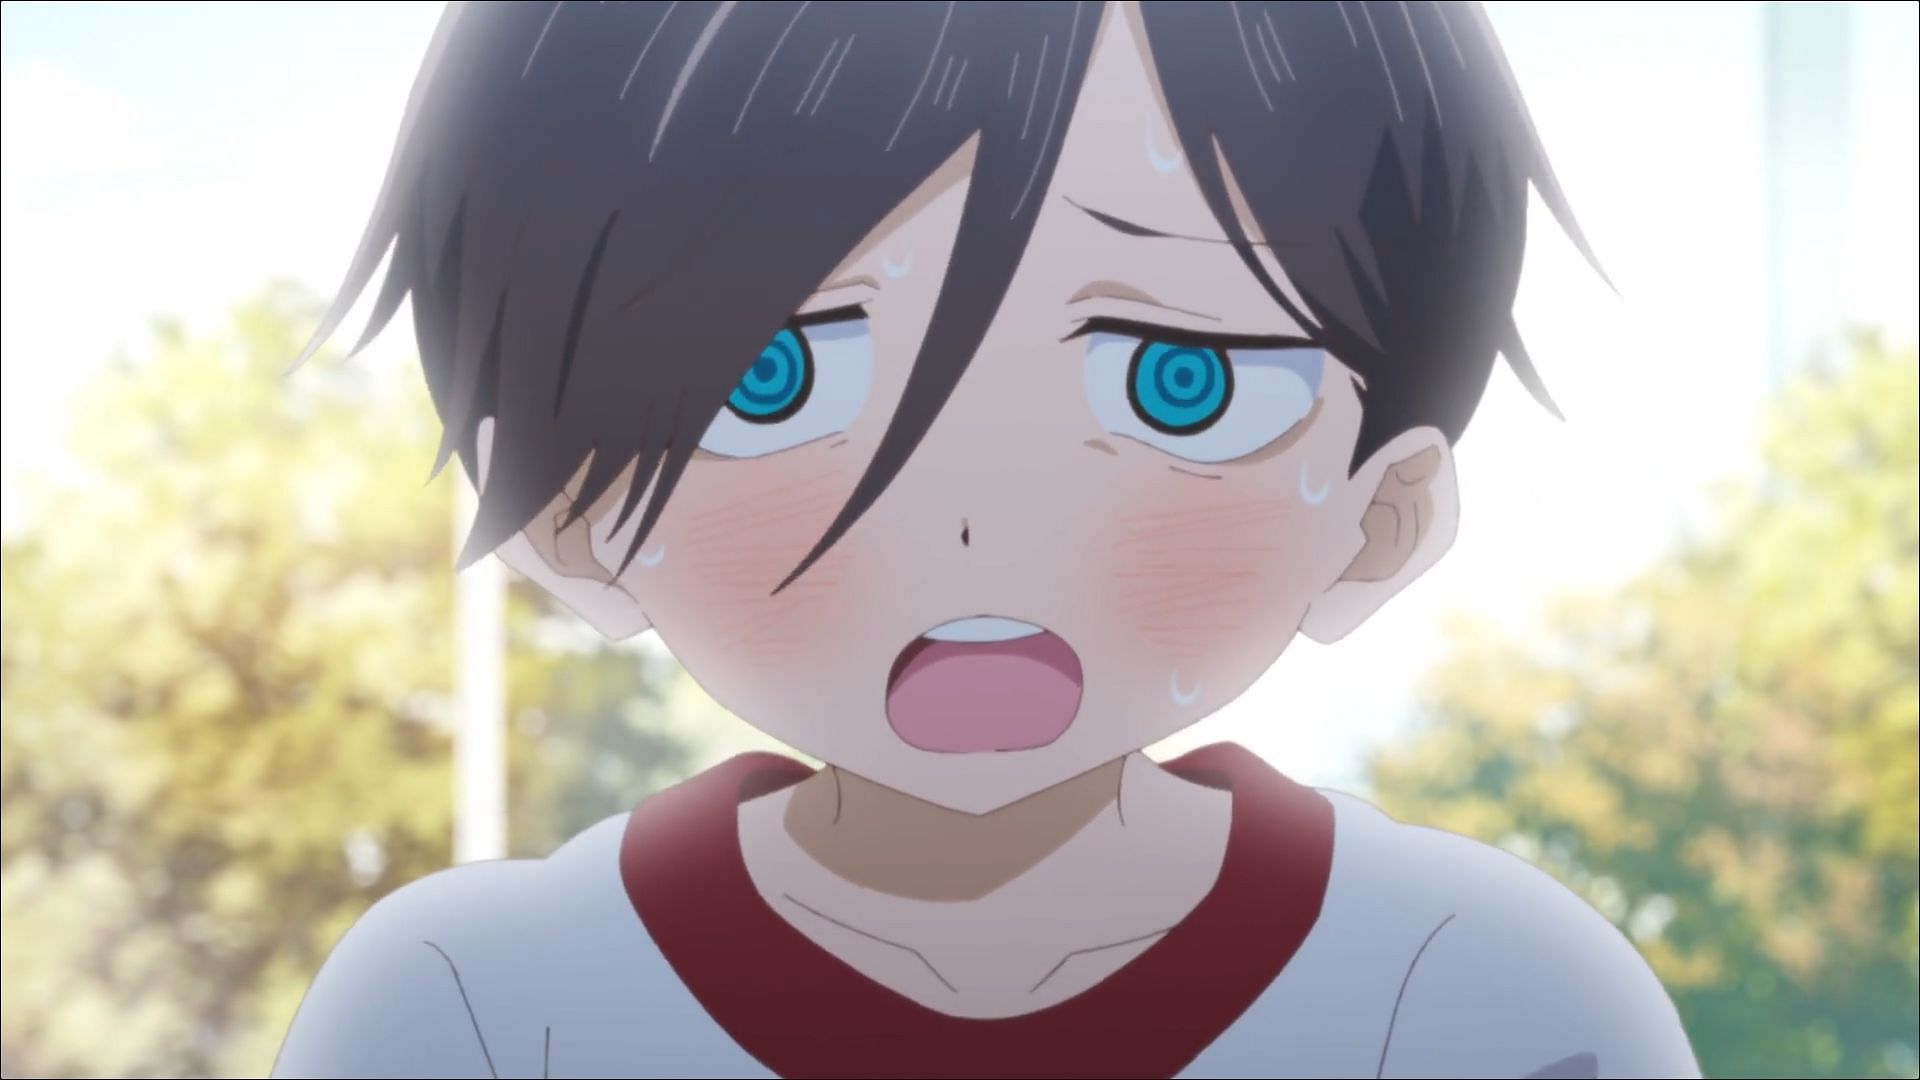 Ichikawa as seen in The Dangers in My Heart (Image via Shin-Ei Animation)